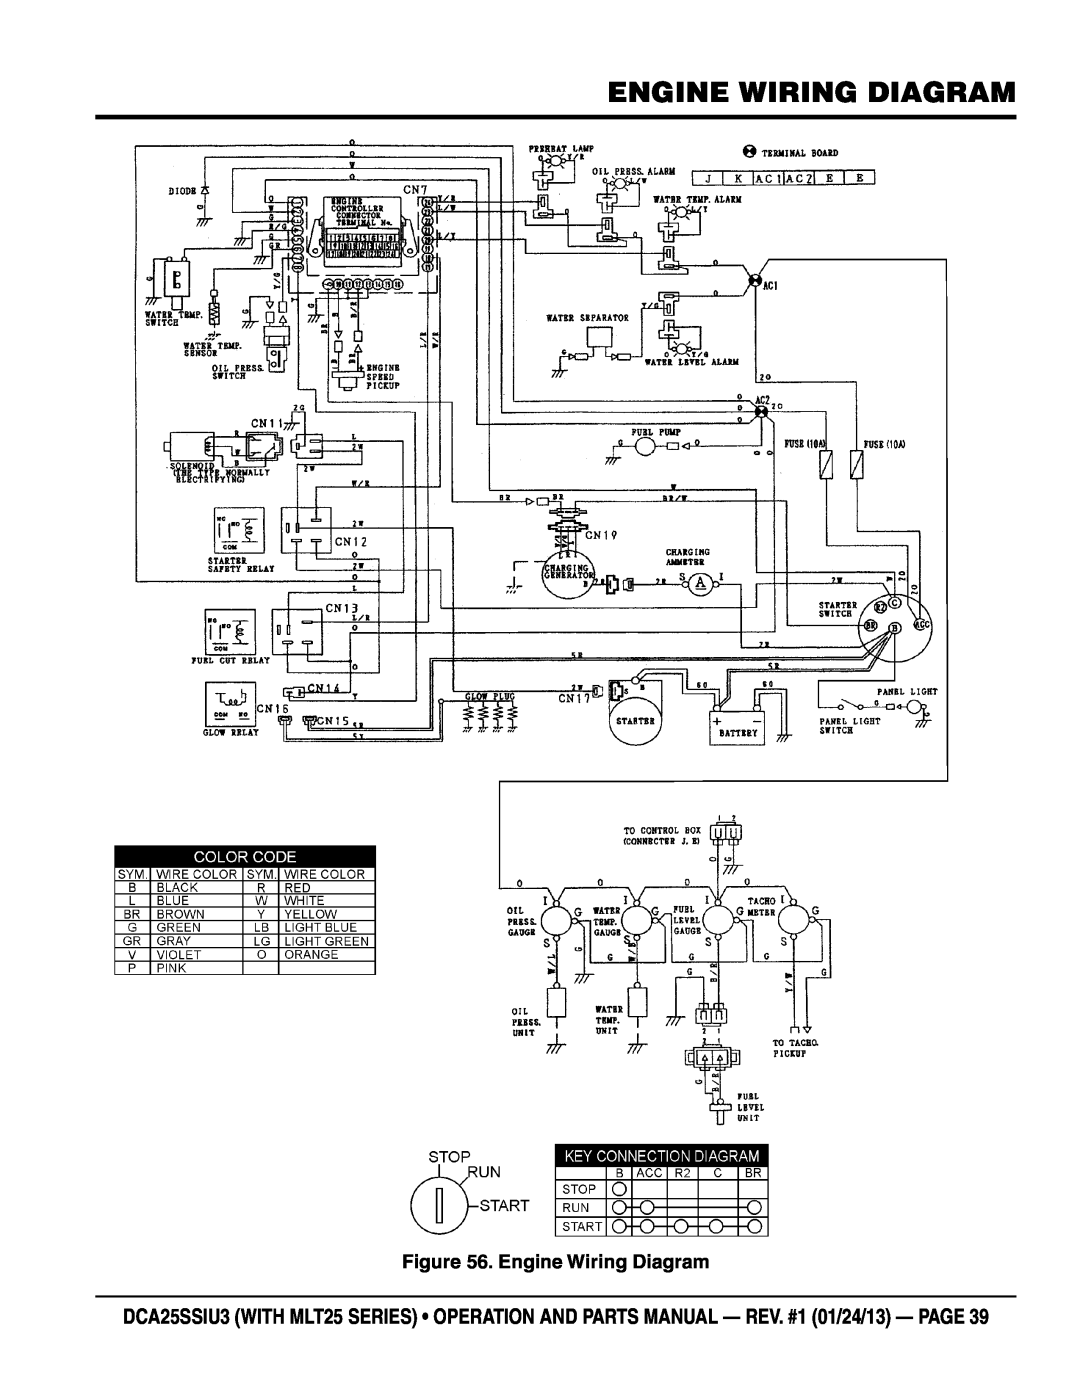 Multiquip dca25ssiu3 manual Engine Wiring Diagram 